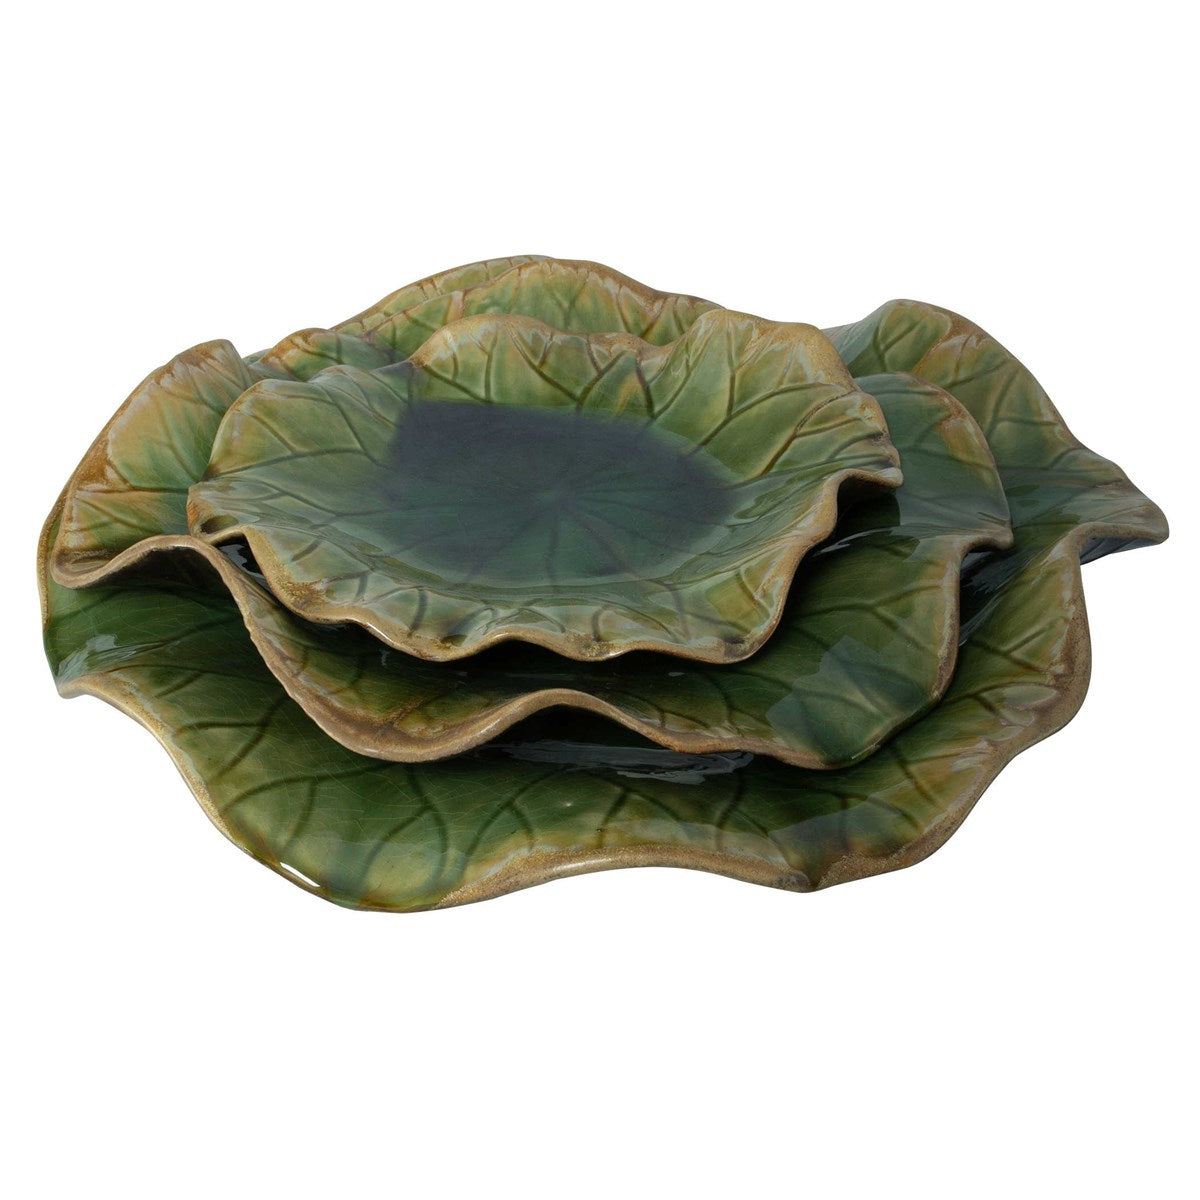 Abella Ceramic Wal Decor, Green, Set of 3